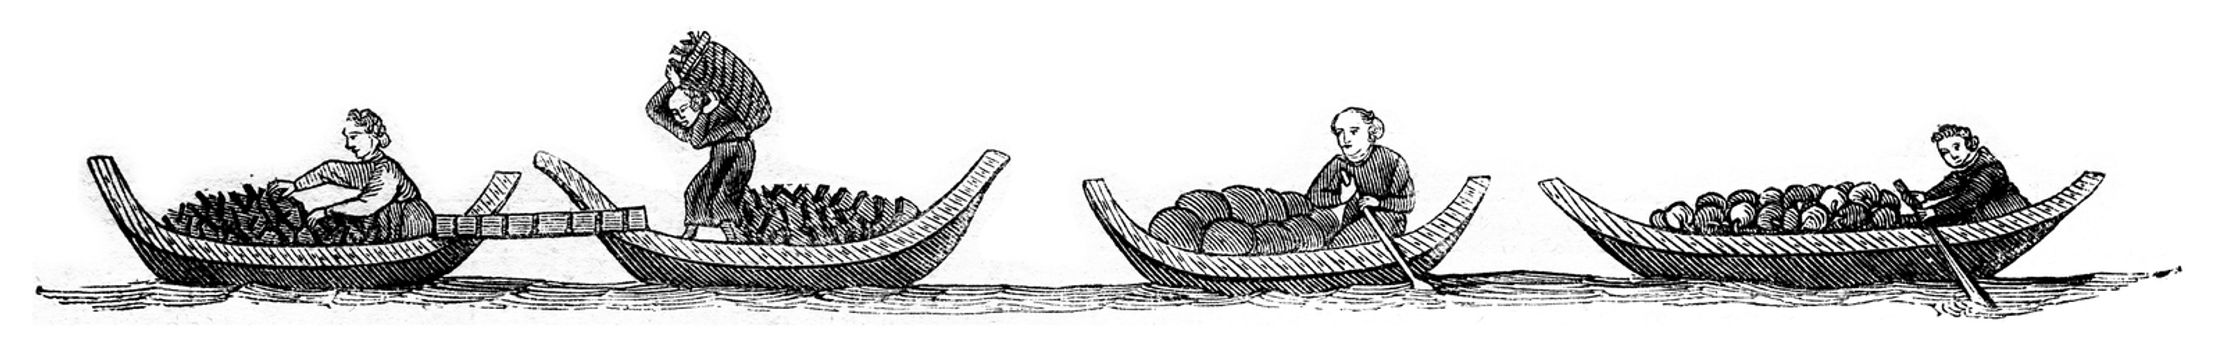 Port coal, fruits boats, vintage engraved illustration. Magasin Pittoresque 1846.
